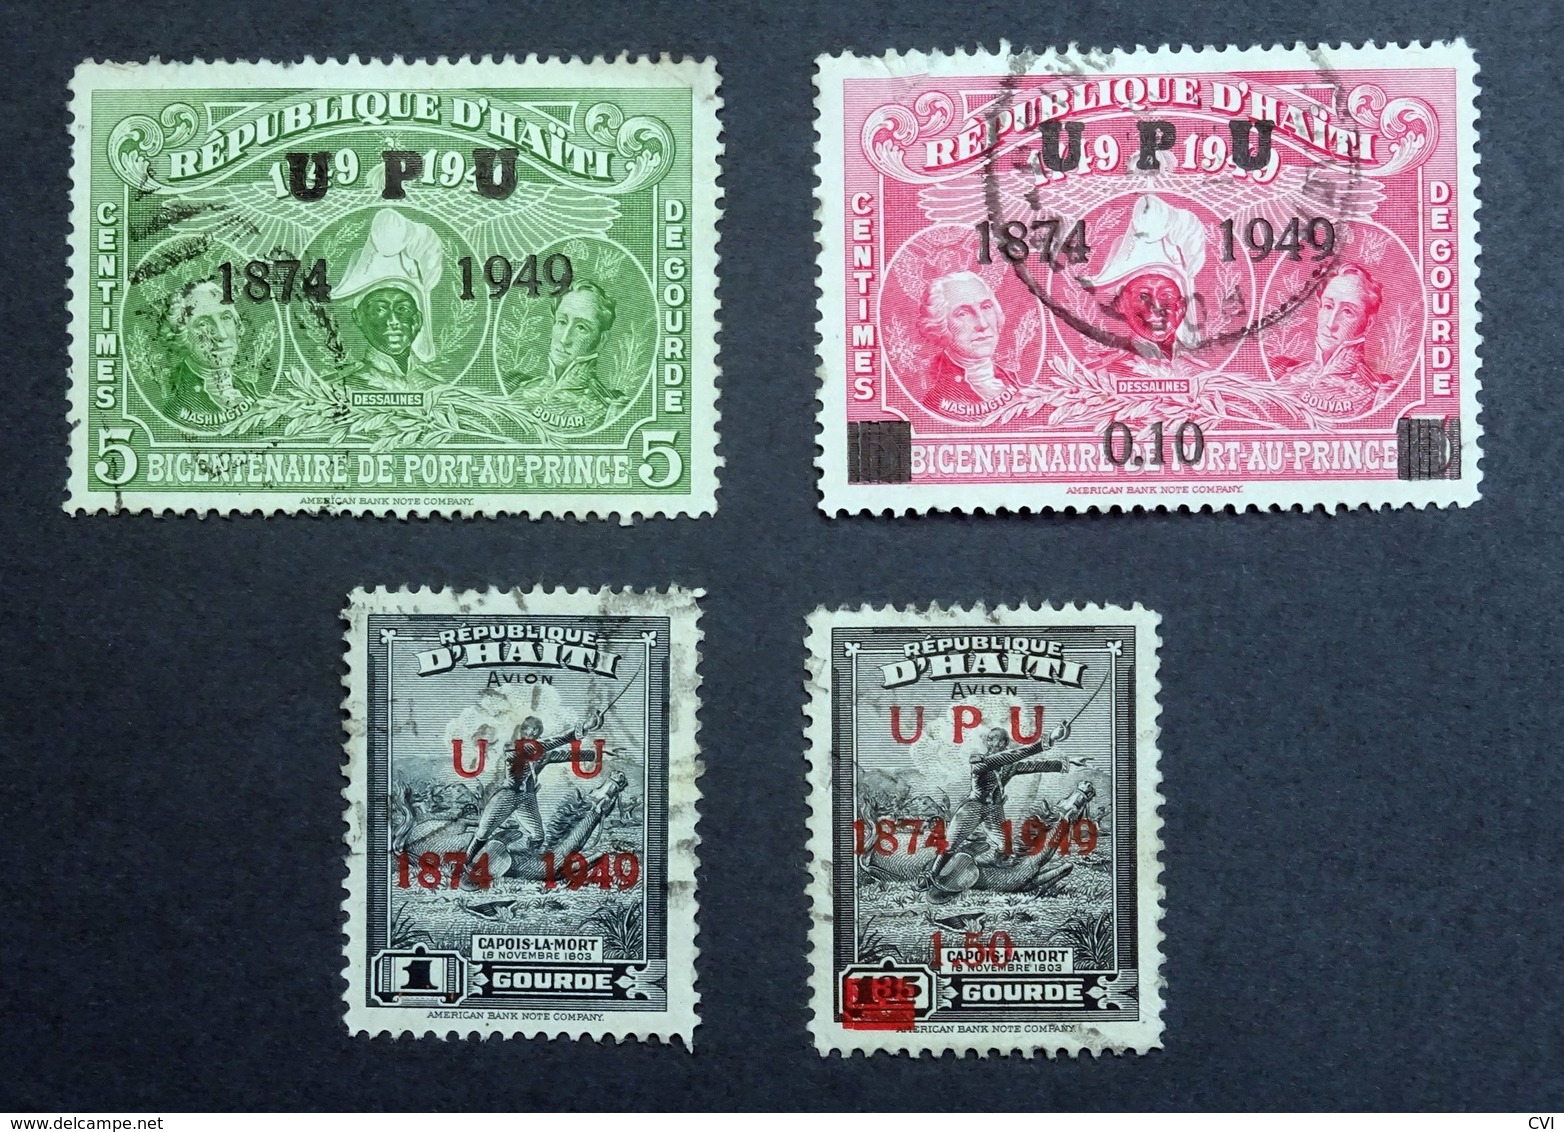 Haiti 1950 "THE 75TH ANNIVERSARY OF UPU" Overprint Used Selection. - Haiti